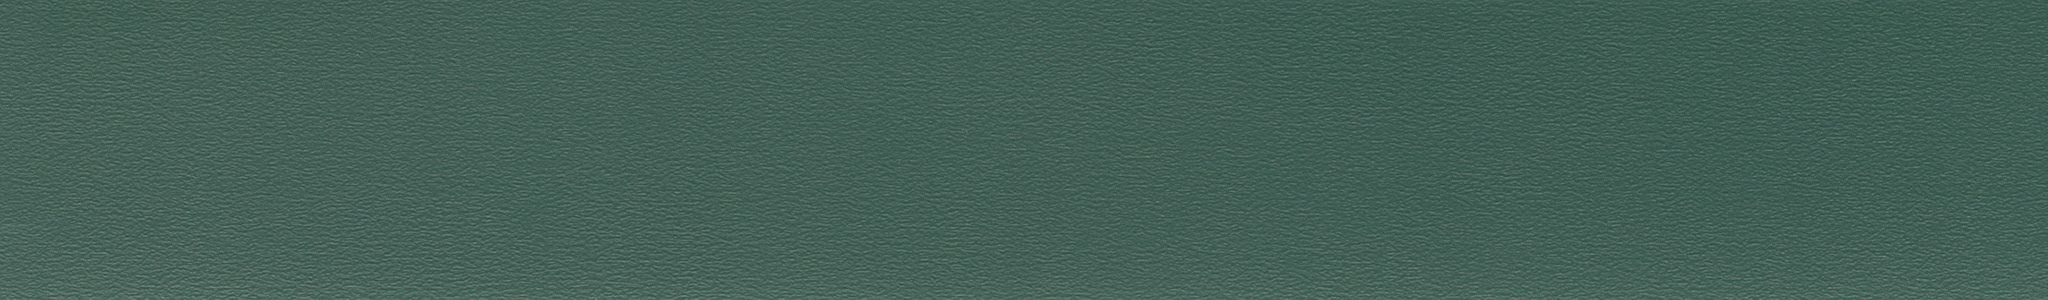 ABS K520 SU Dark Emerald 22x1mm HU 160520